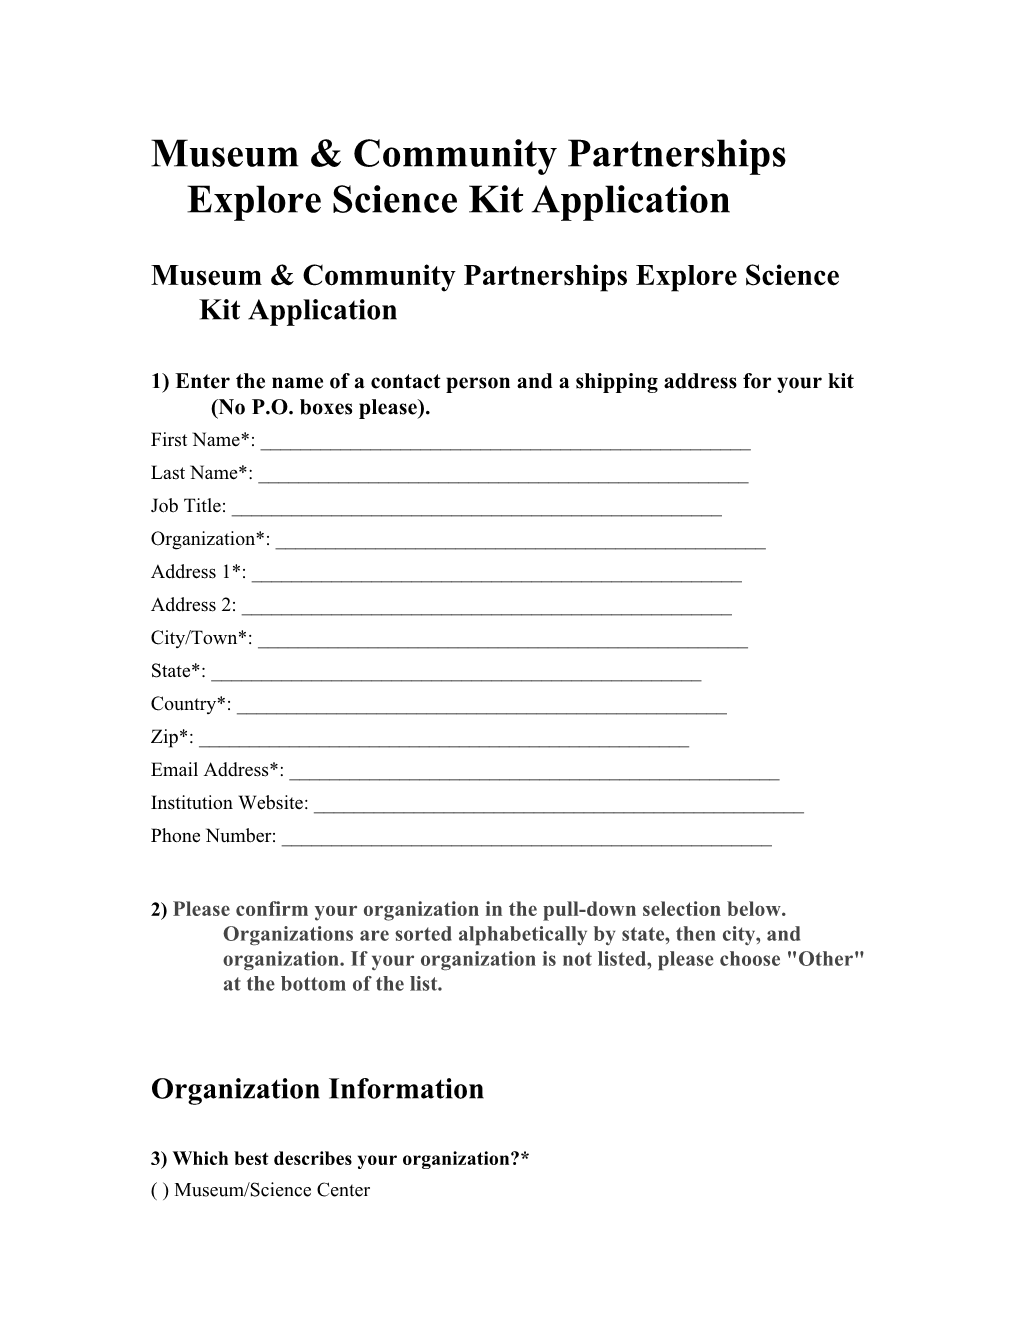 Museum & Community Partnerships Explore Science Kit Application